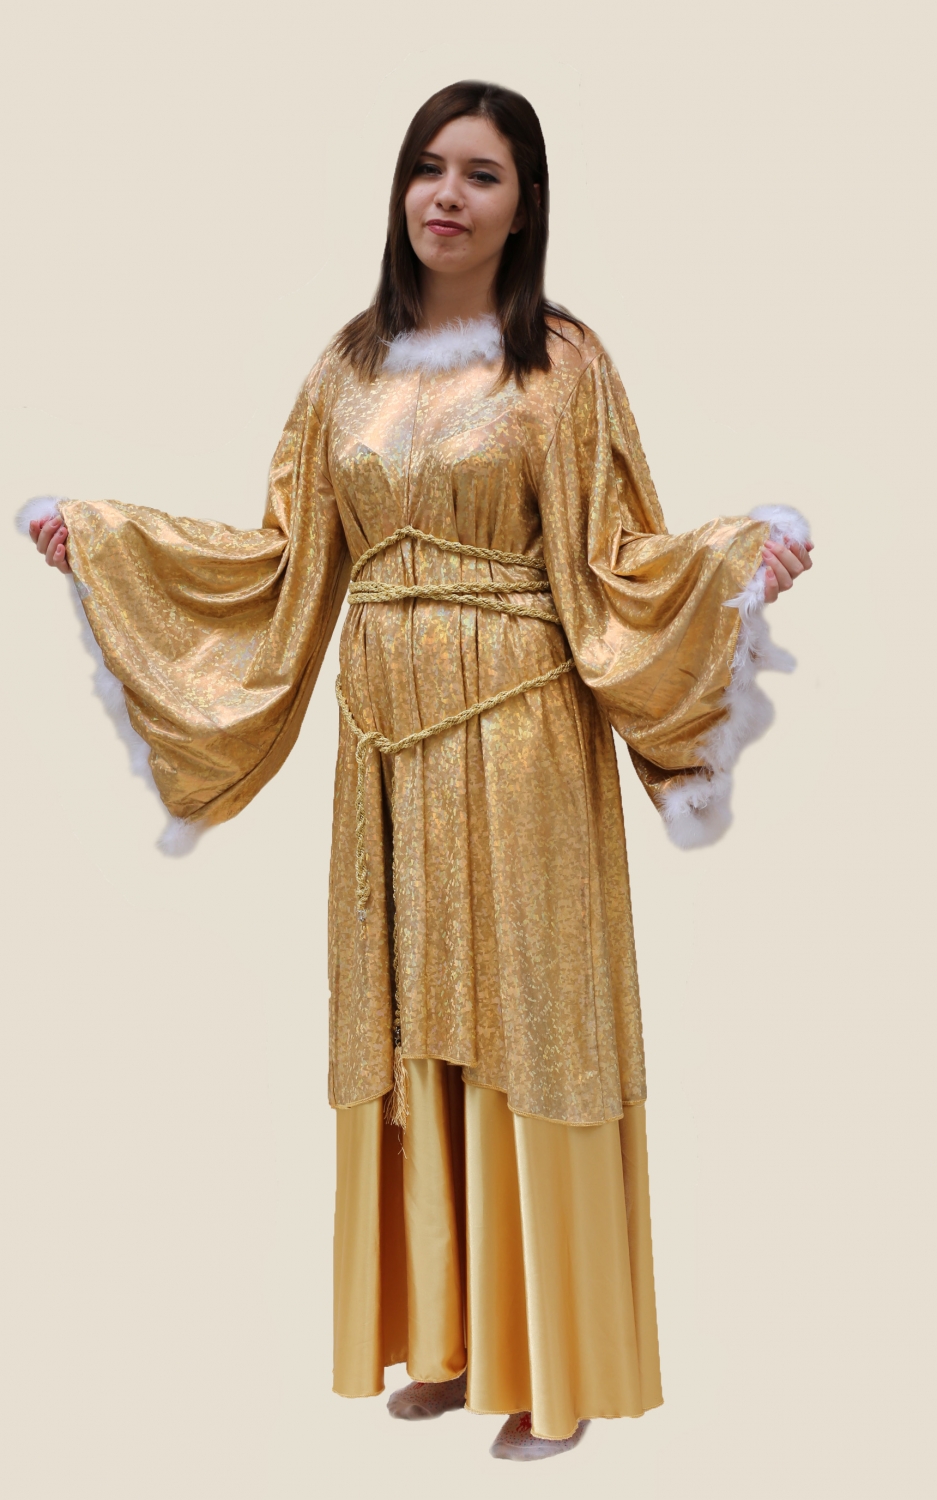 azize-altın-melek-kostumu